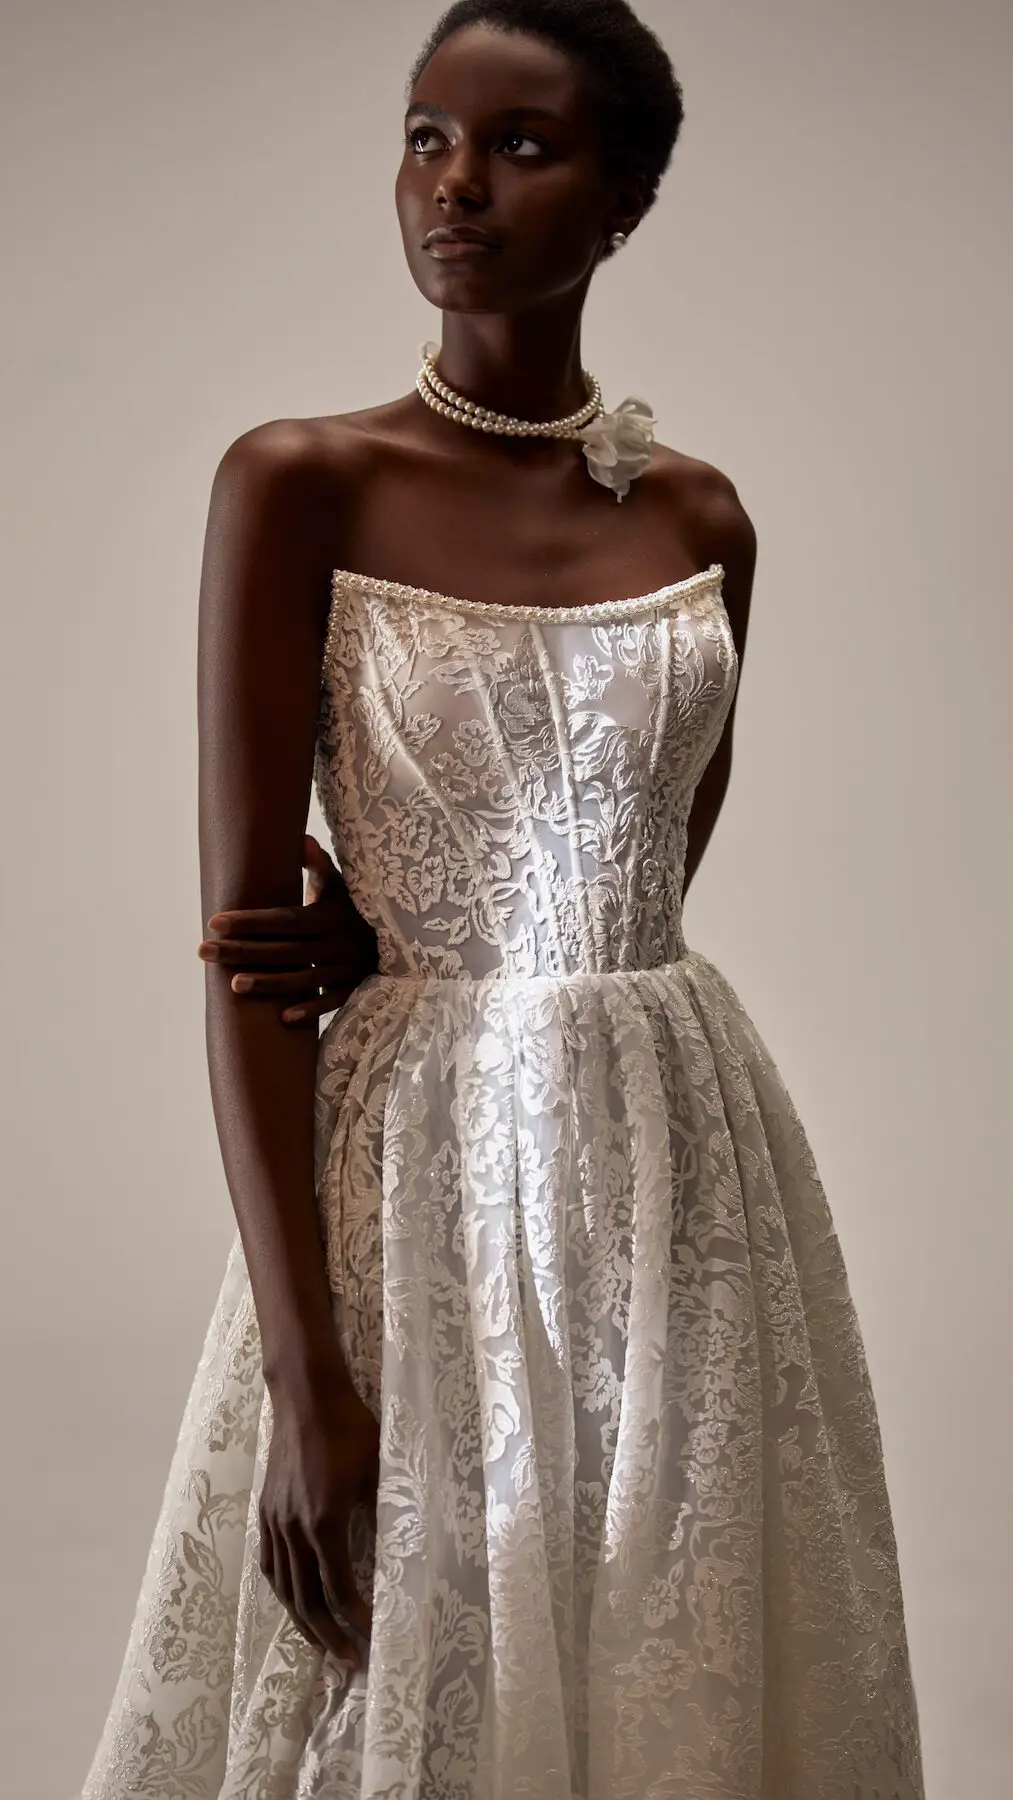 Lace strapless Wedding Dress by Milla Nova - Vitalia white lace